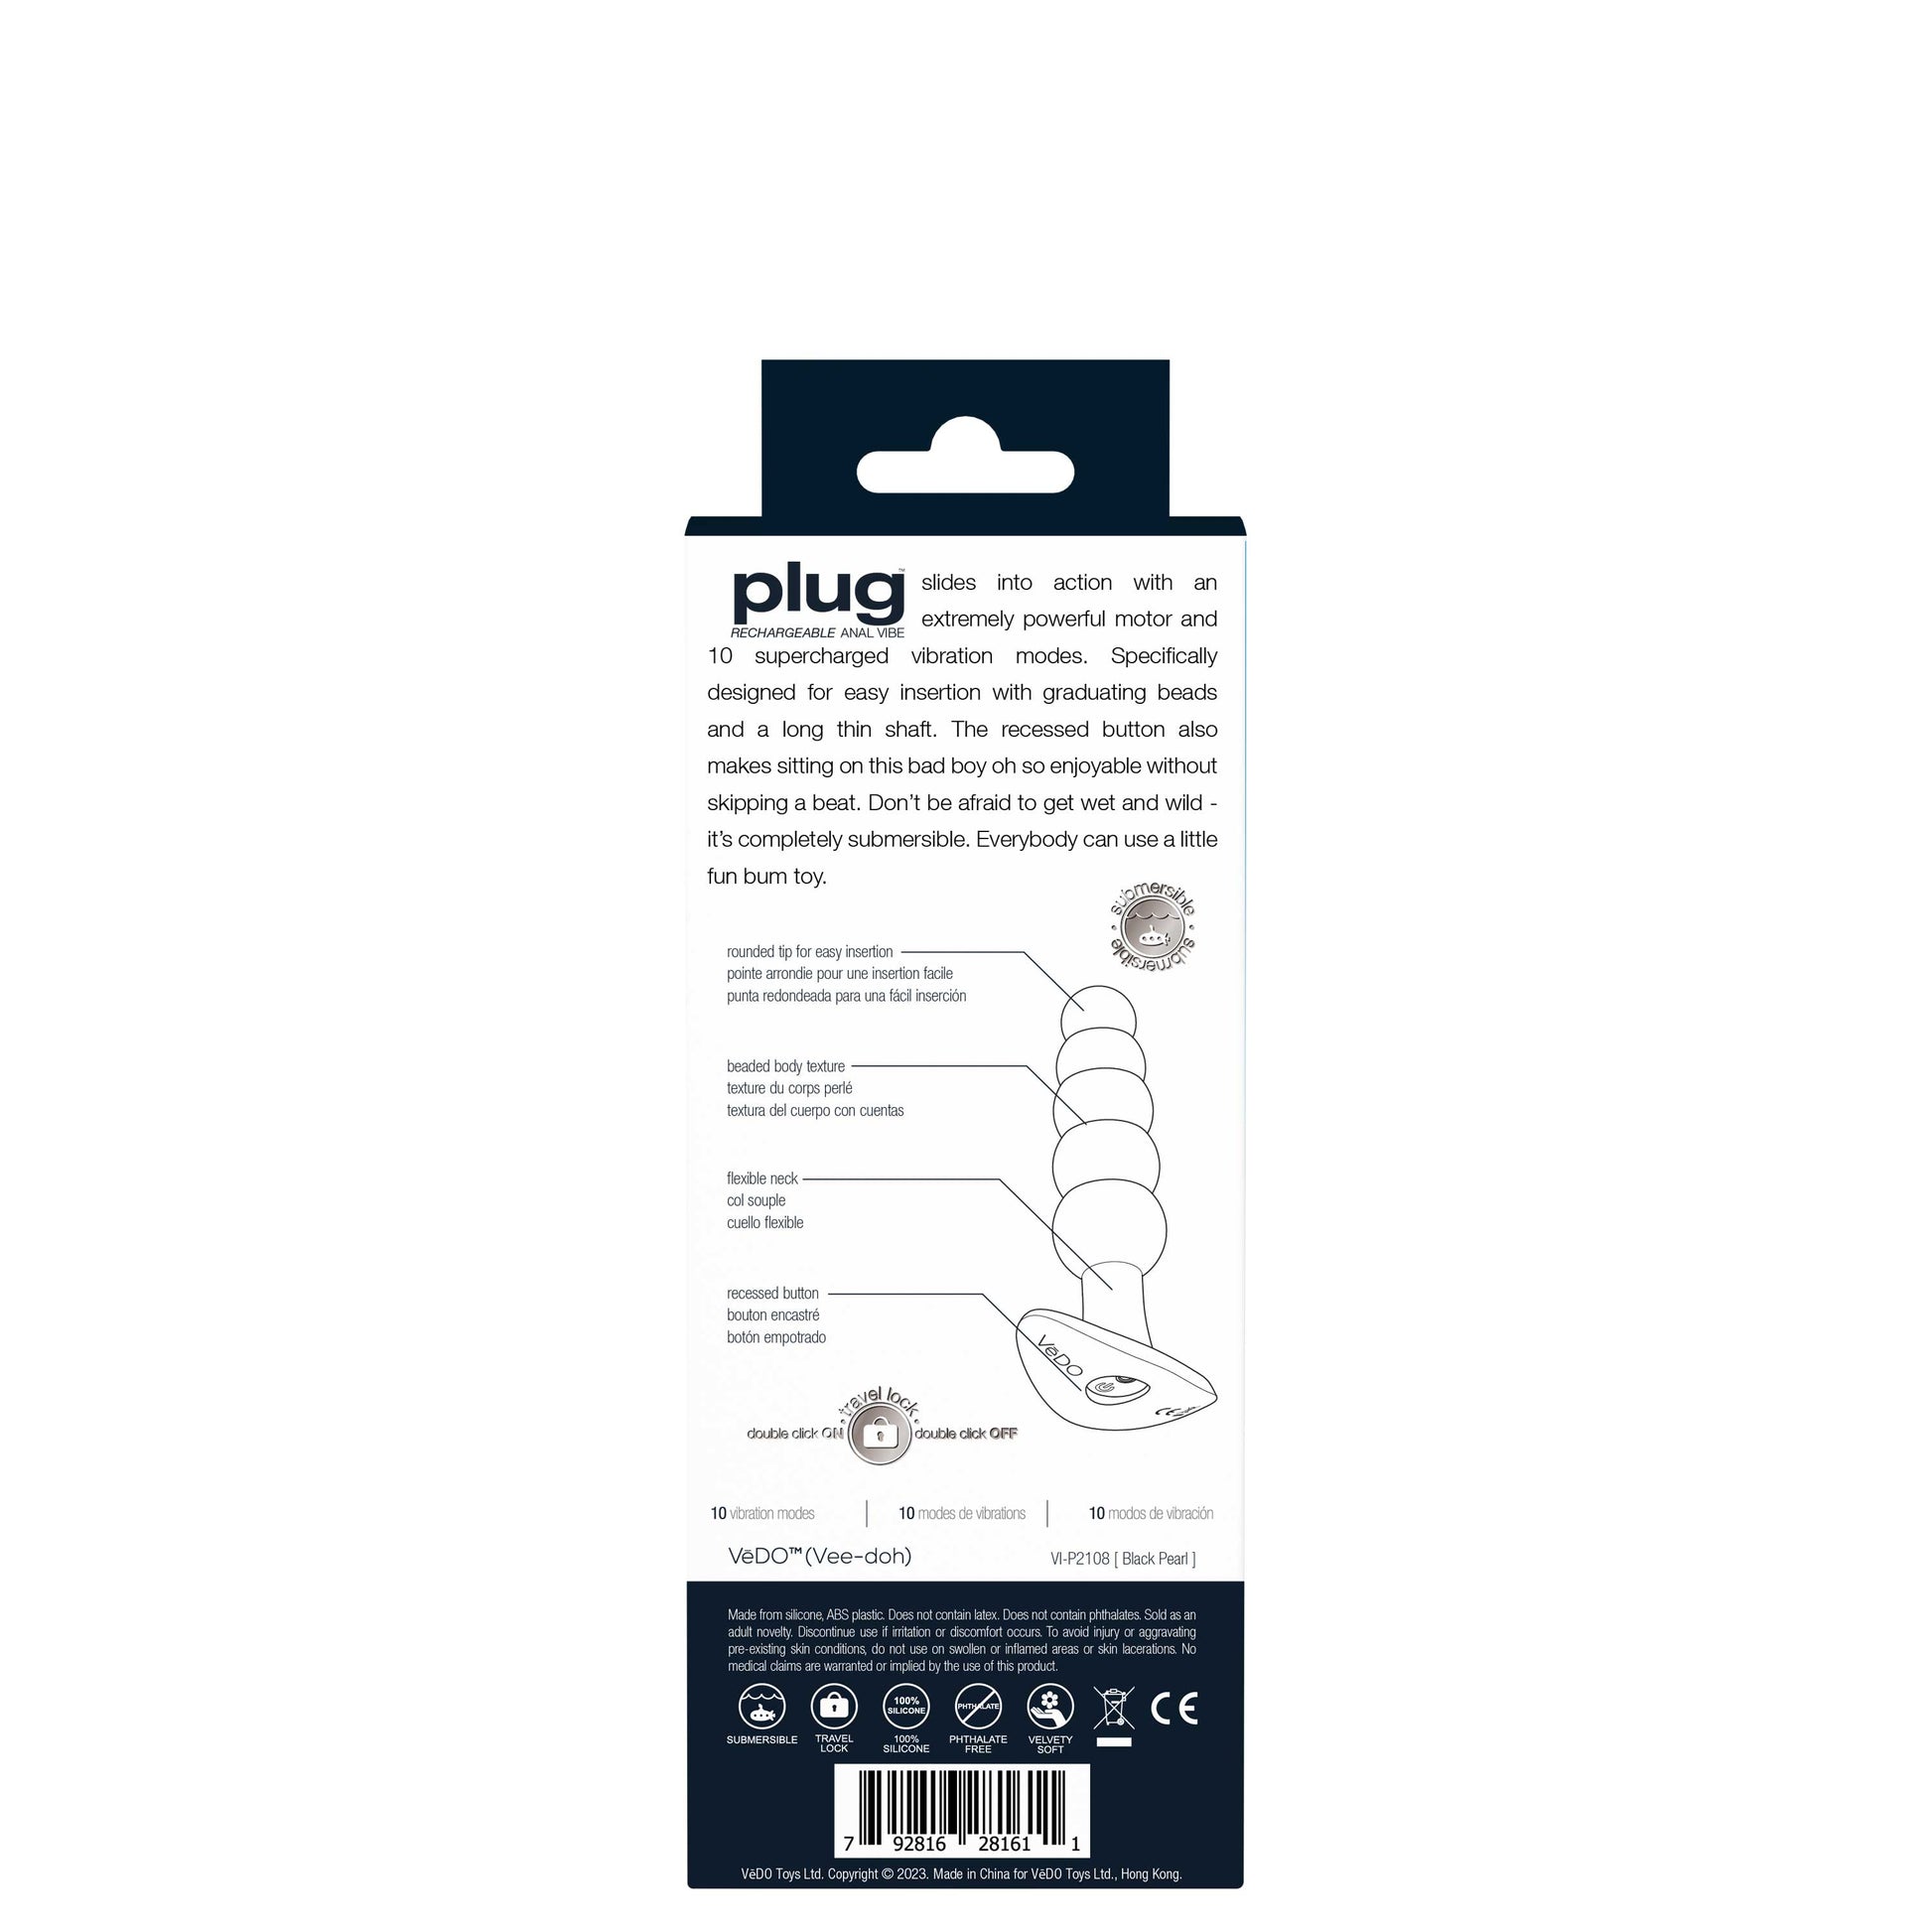 Plug Rechargeable Anal Vibe - Black Pearl VI-P2108